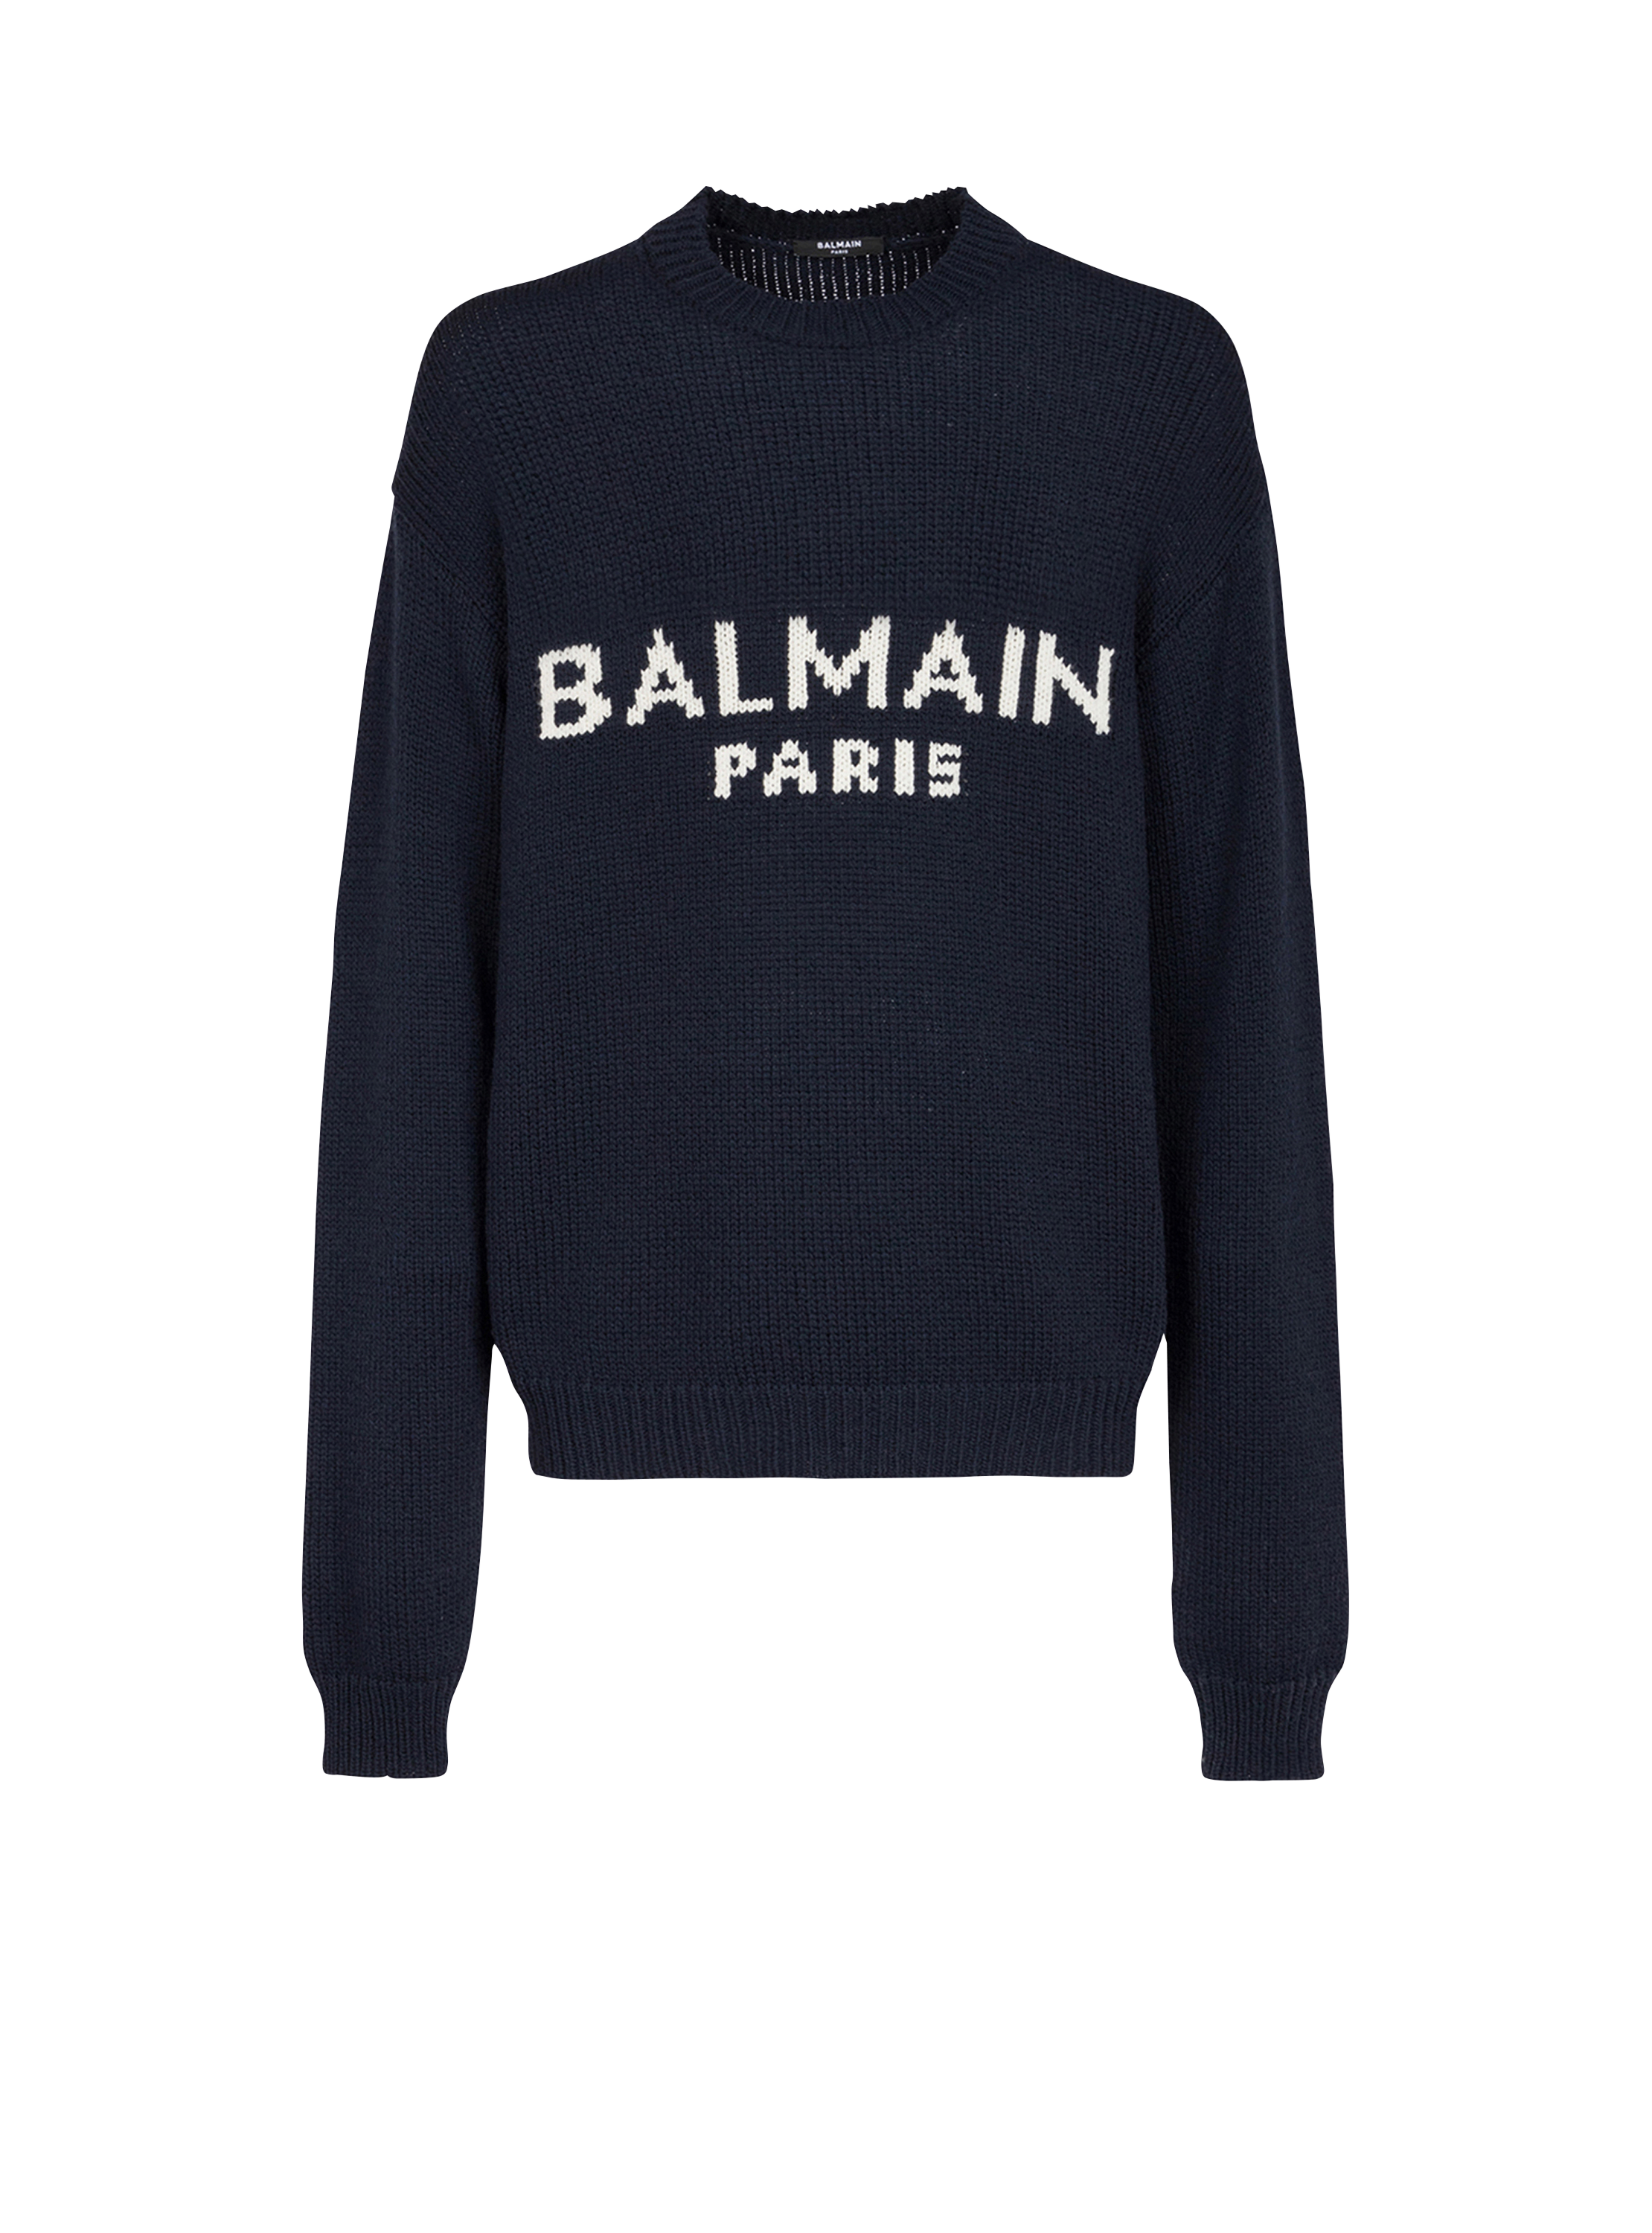 Tåler dyb stave Wool sweater with Balmain Paris logo black - Men | BALMAIN